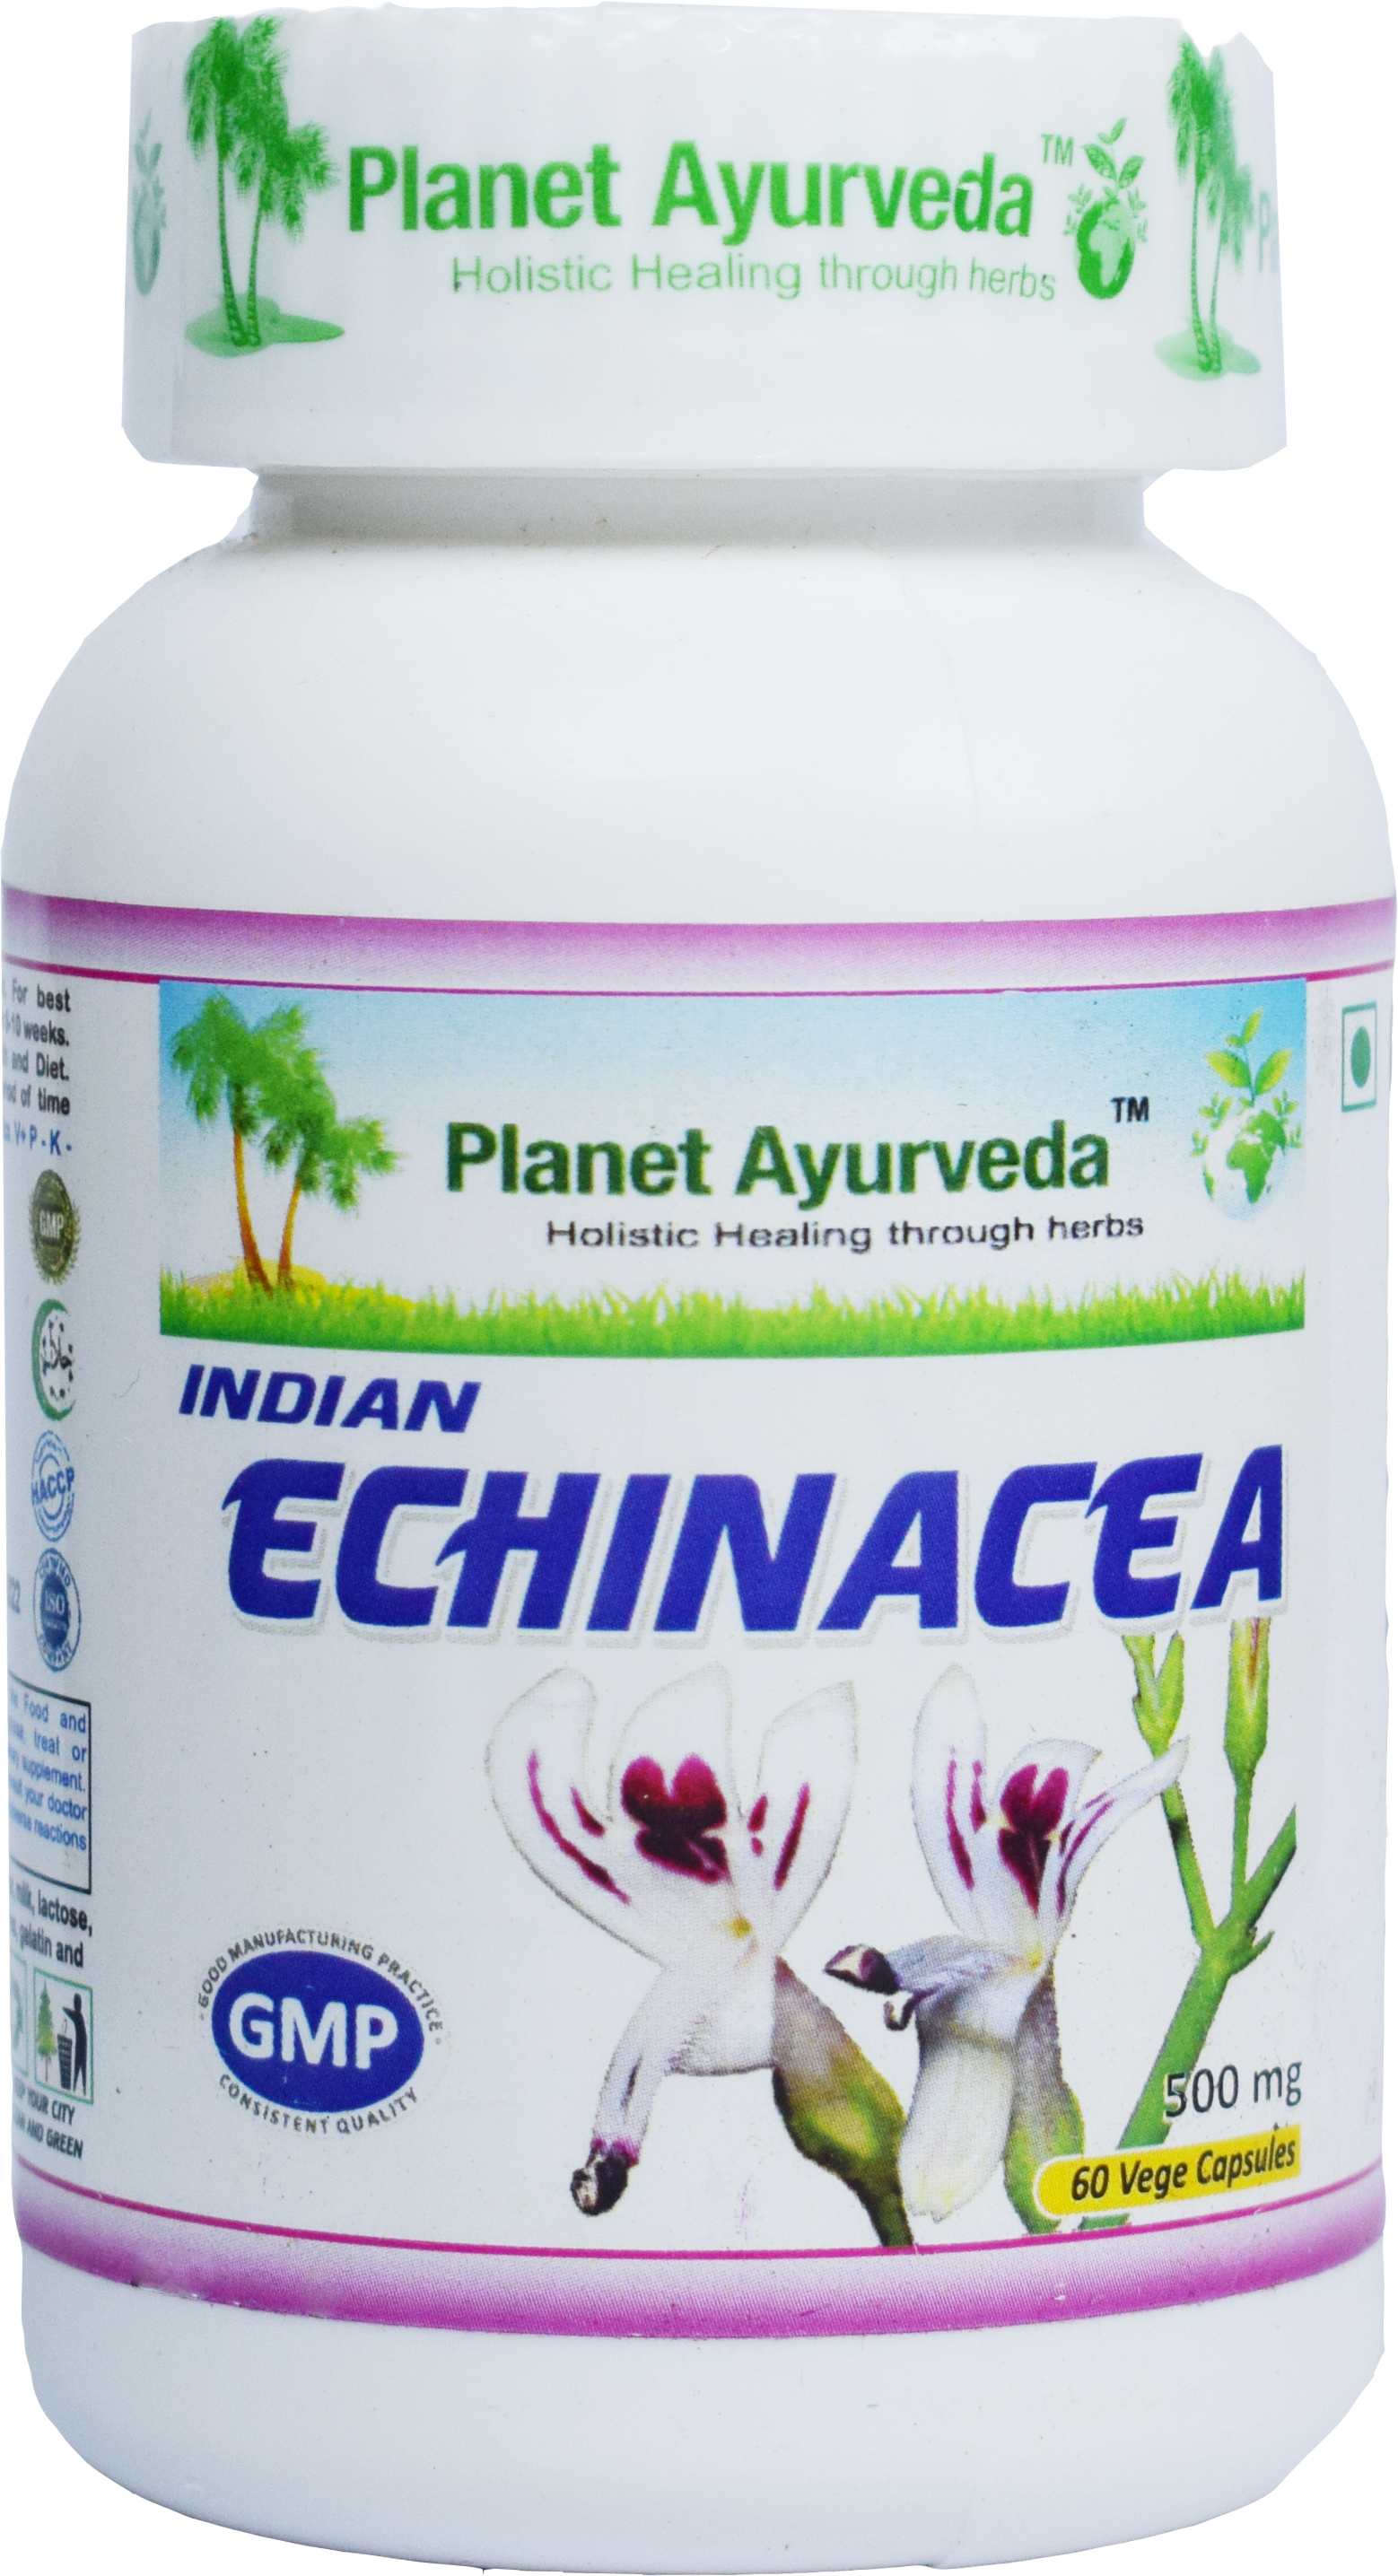 Planet Ayurveda Indian Echinacea Capsules